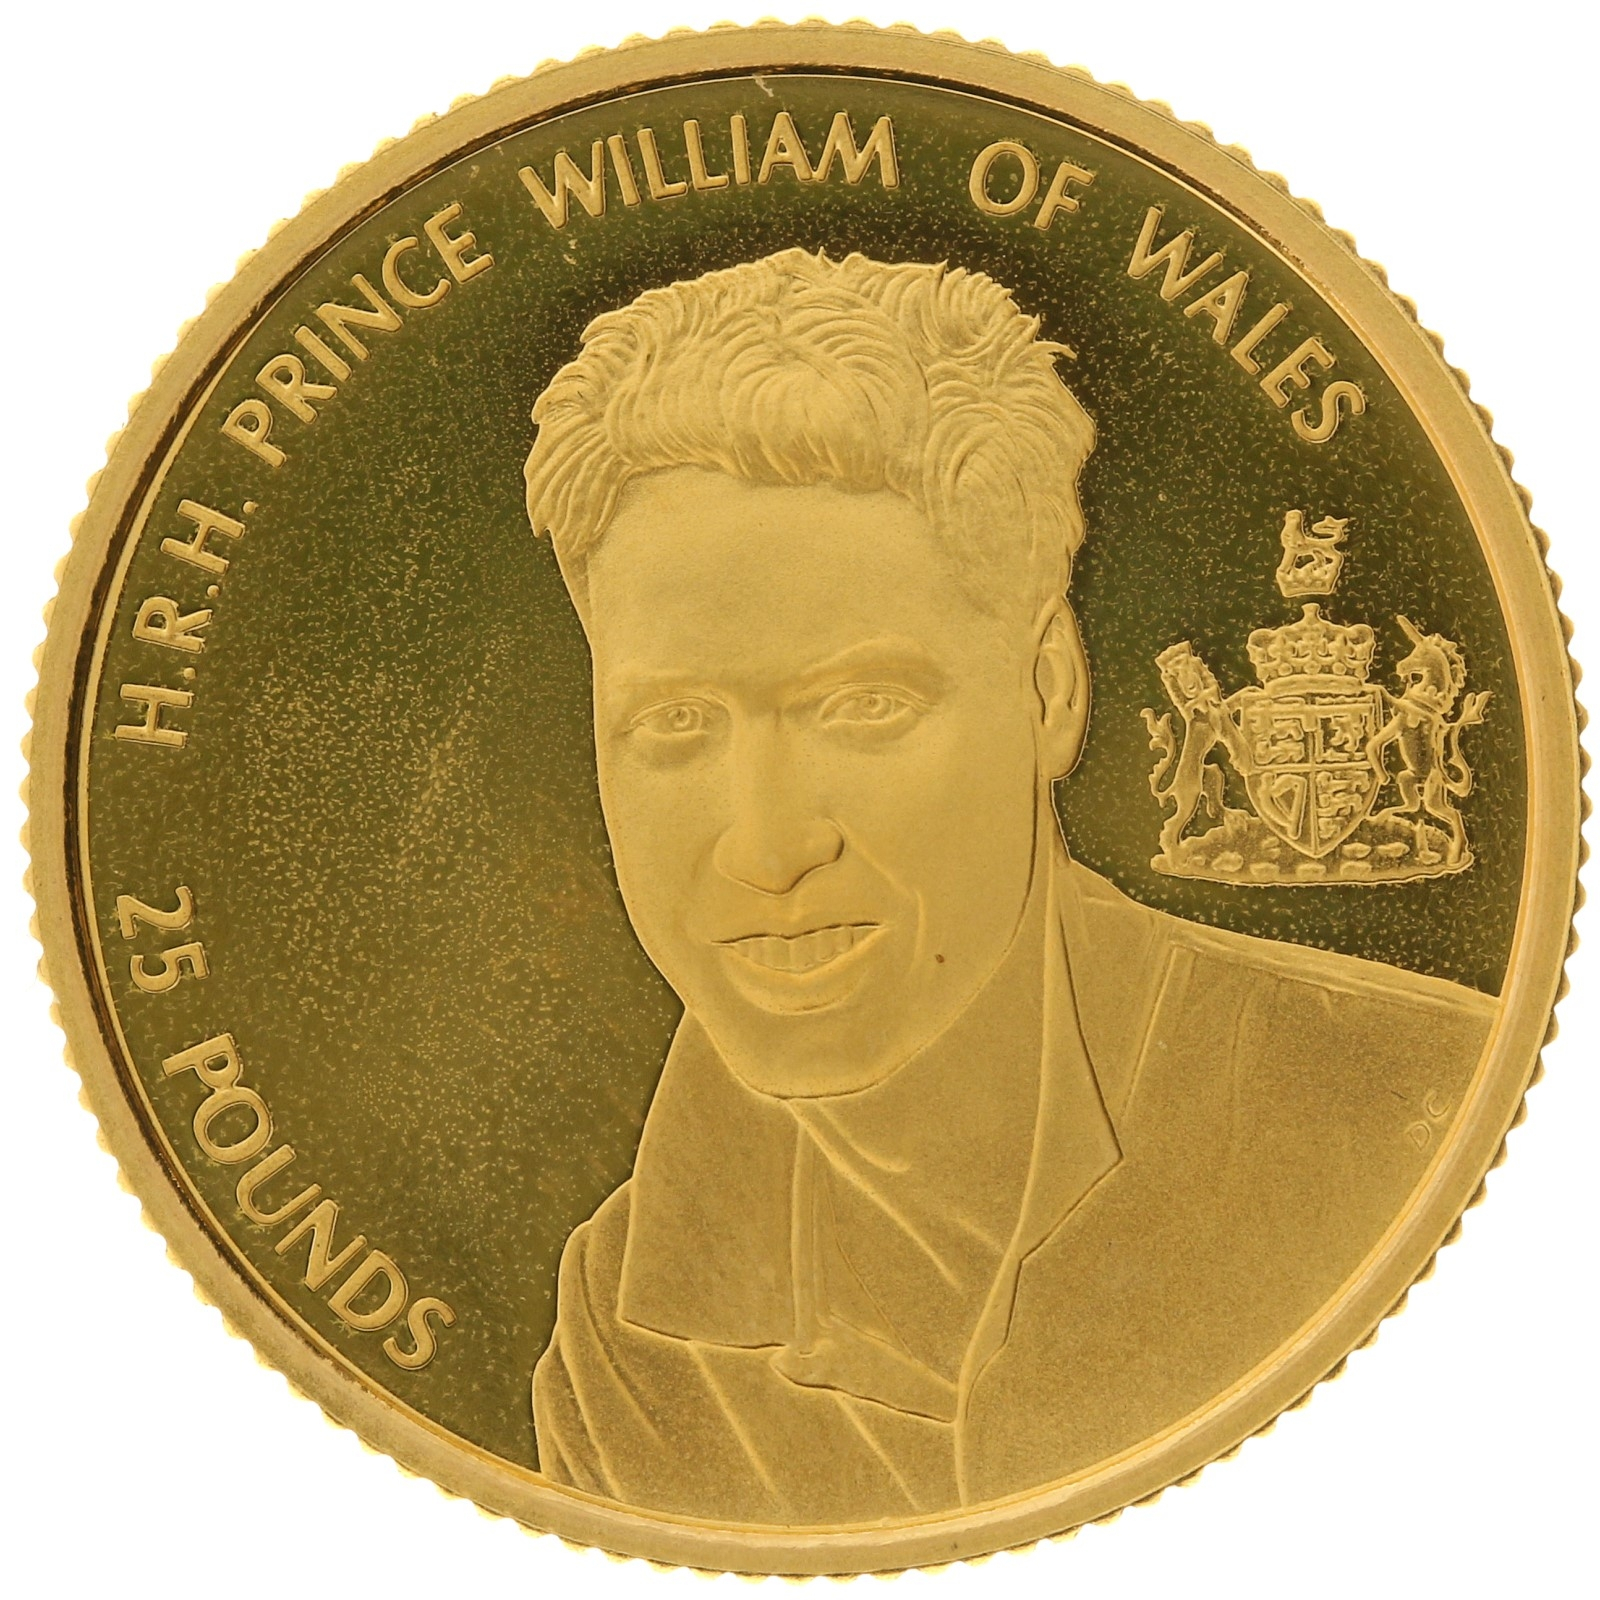 Alderney - 25 pounds - 2003 - Prince William